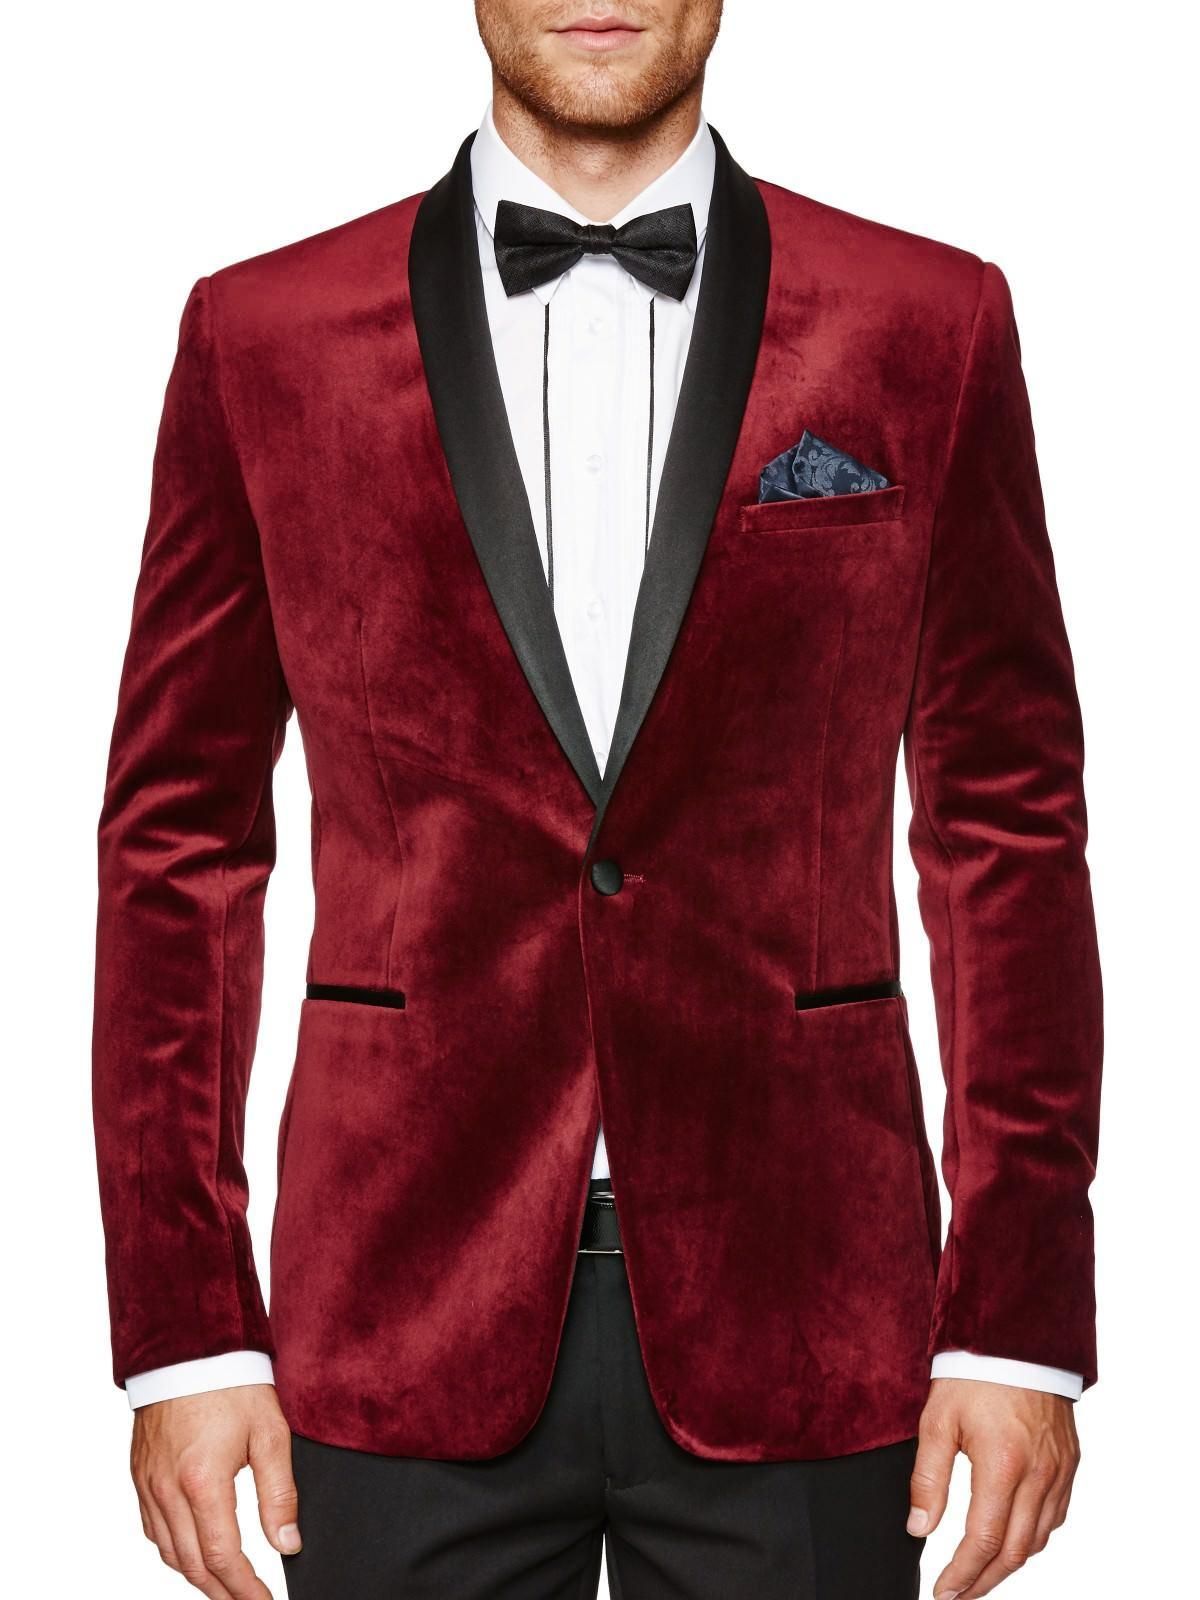 Fashionable Groom Tuxedos Groomsmen One Button Dark Red Shawl Lapel Best Man Suit Wedding Men S Blazer Suits Jacket Pants Grey Tuxedos Male Wedding